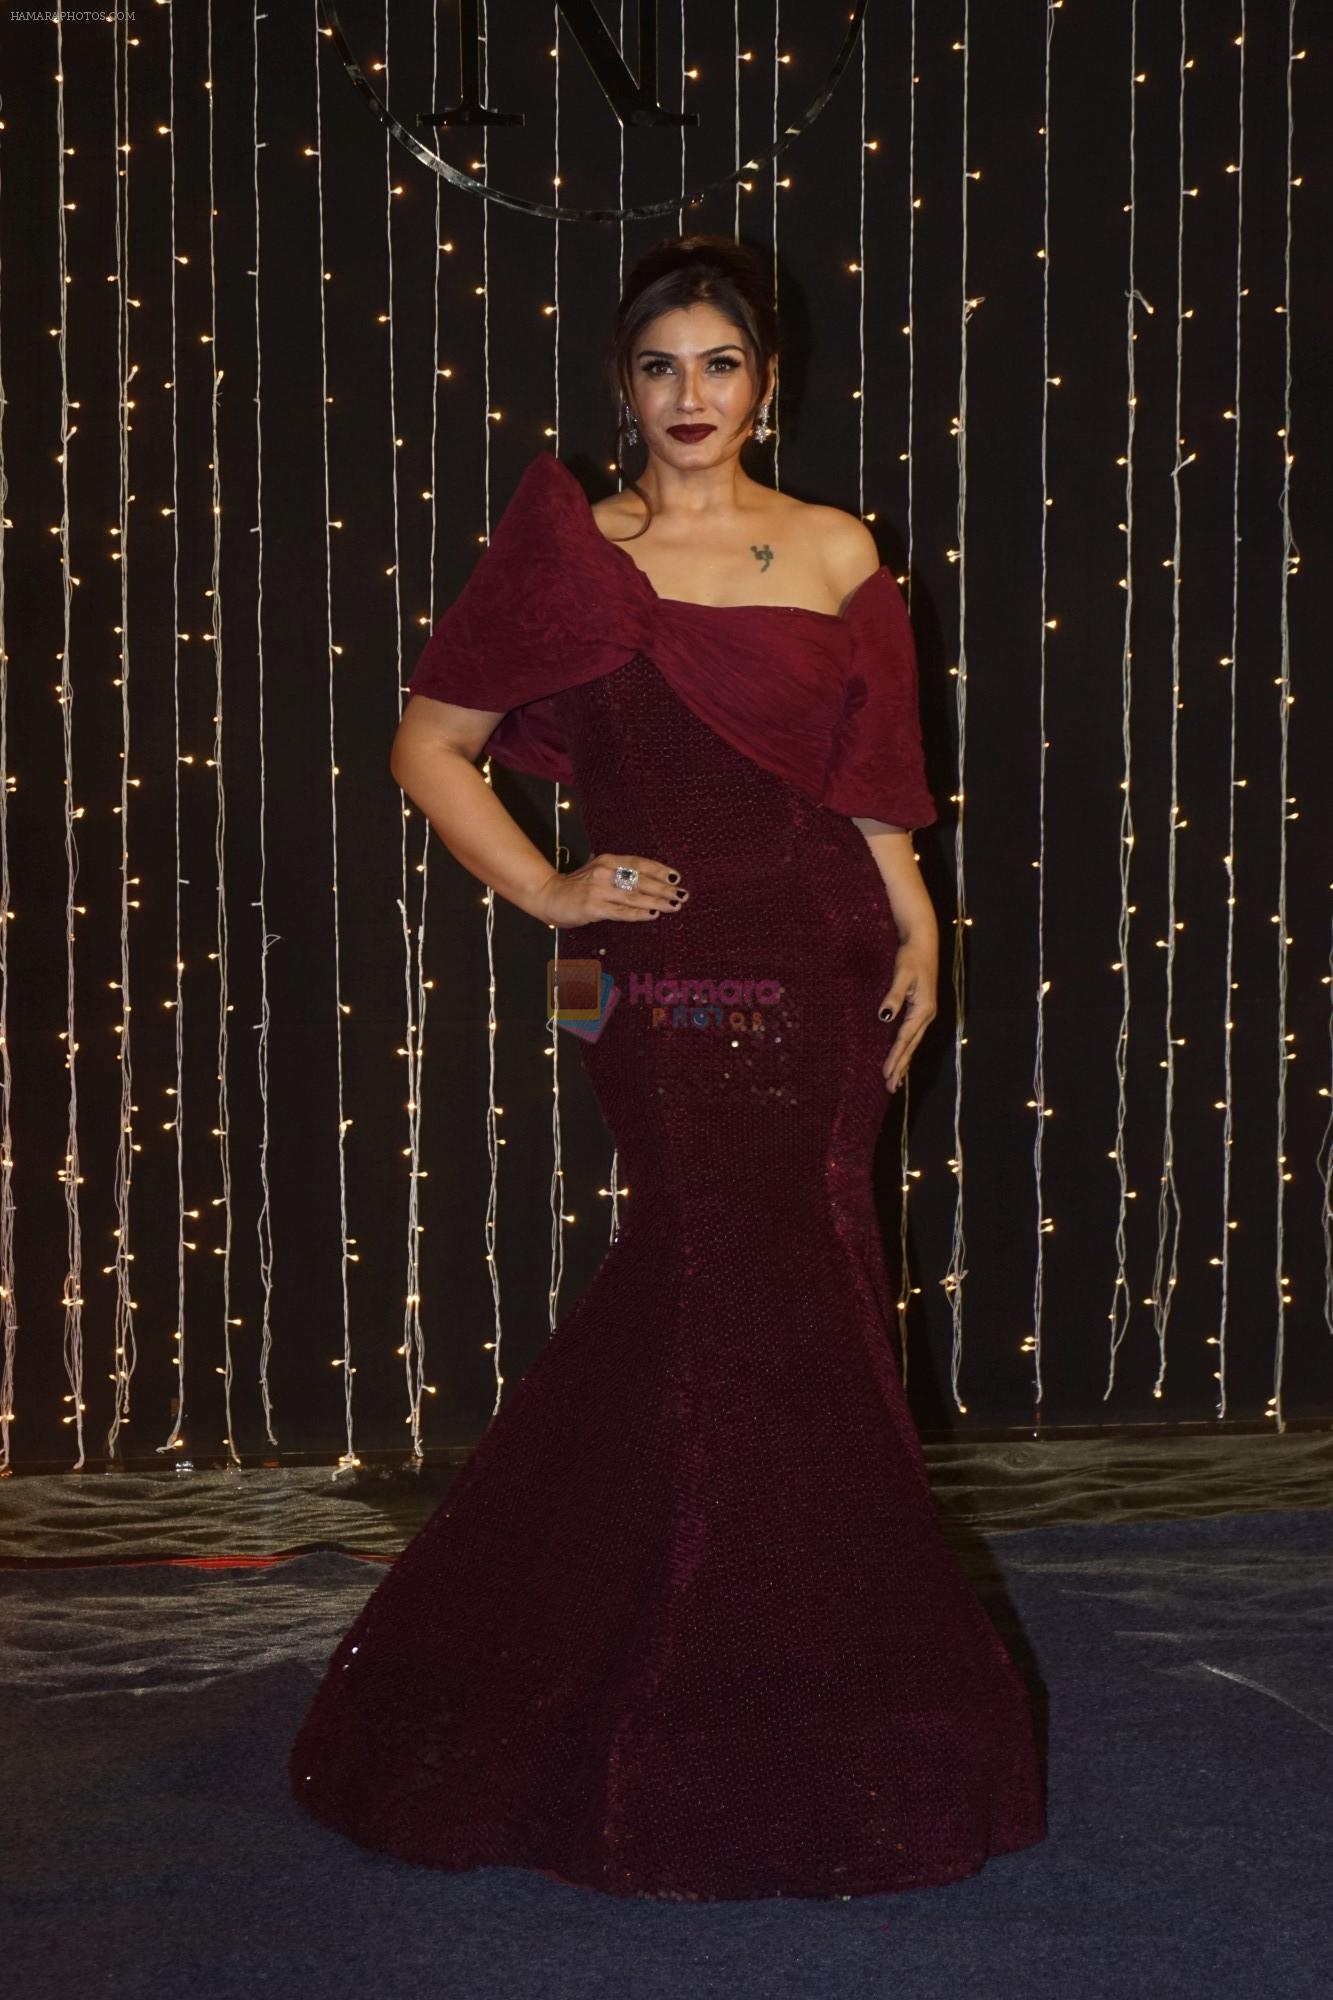 Raveena Tandon at Priyanka Chopra & Nick Jonas wedding reception in Taj Lands End bandra on 20th Dec 2018